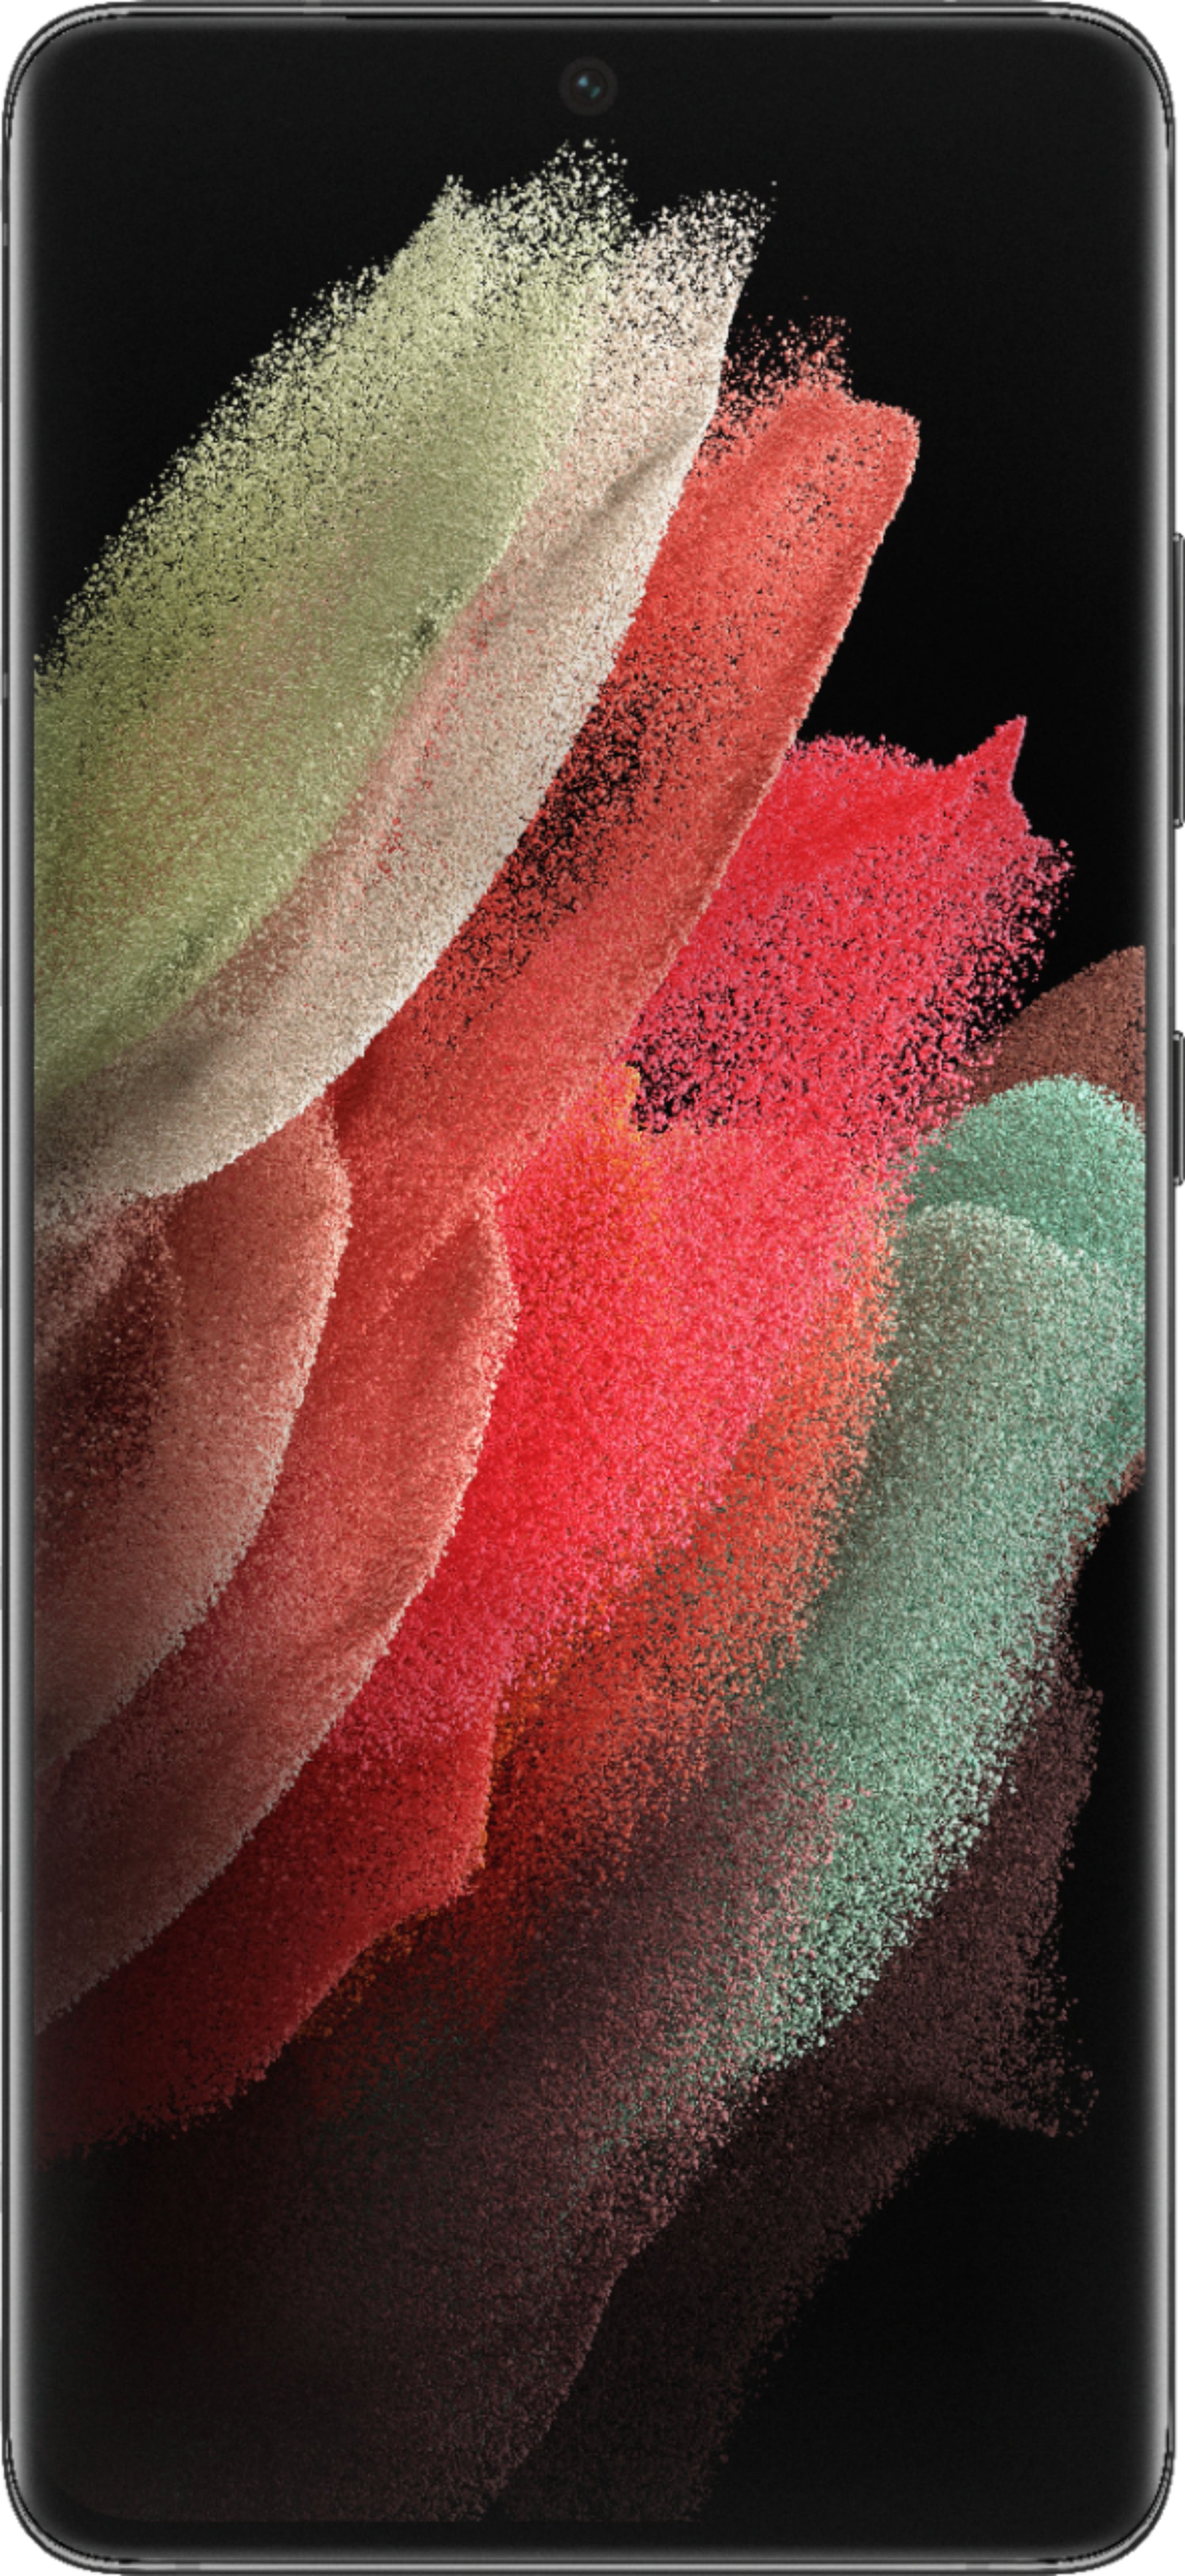 AT&T Samsung Galaxy S21 Ultra 5G Silver 128GB 